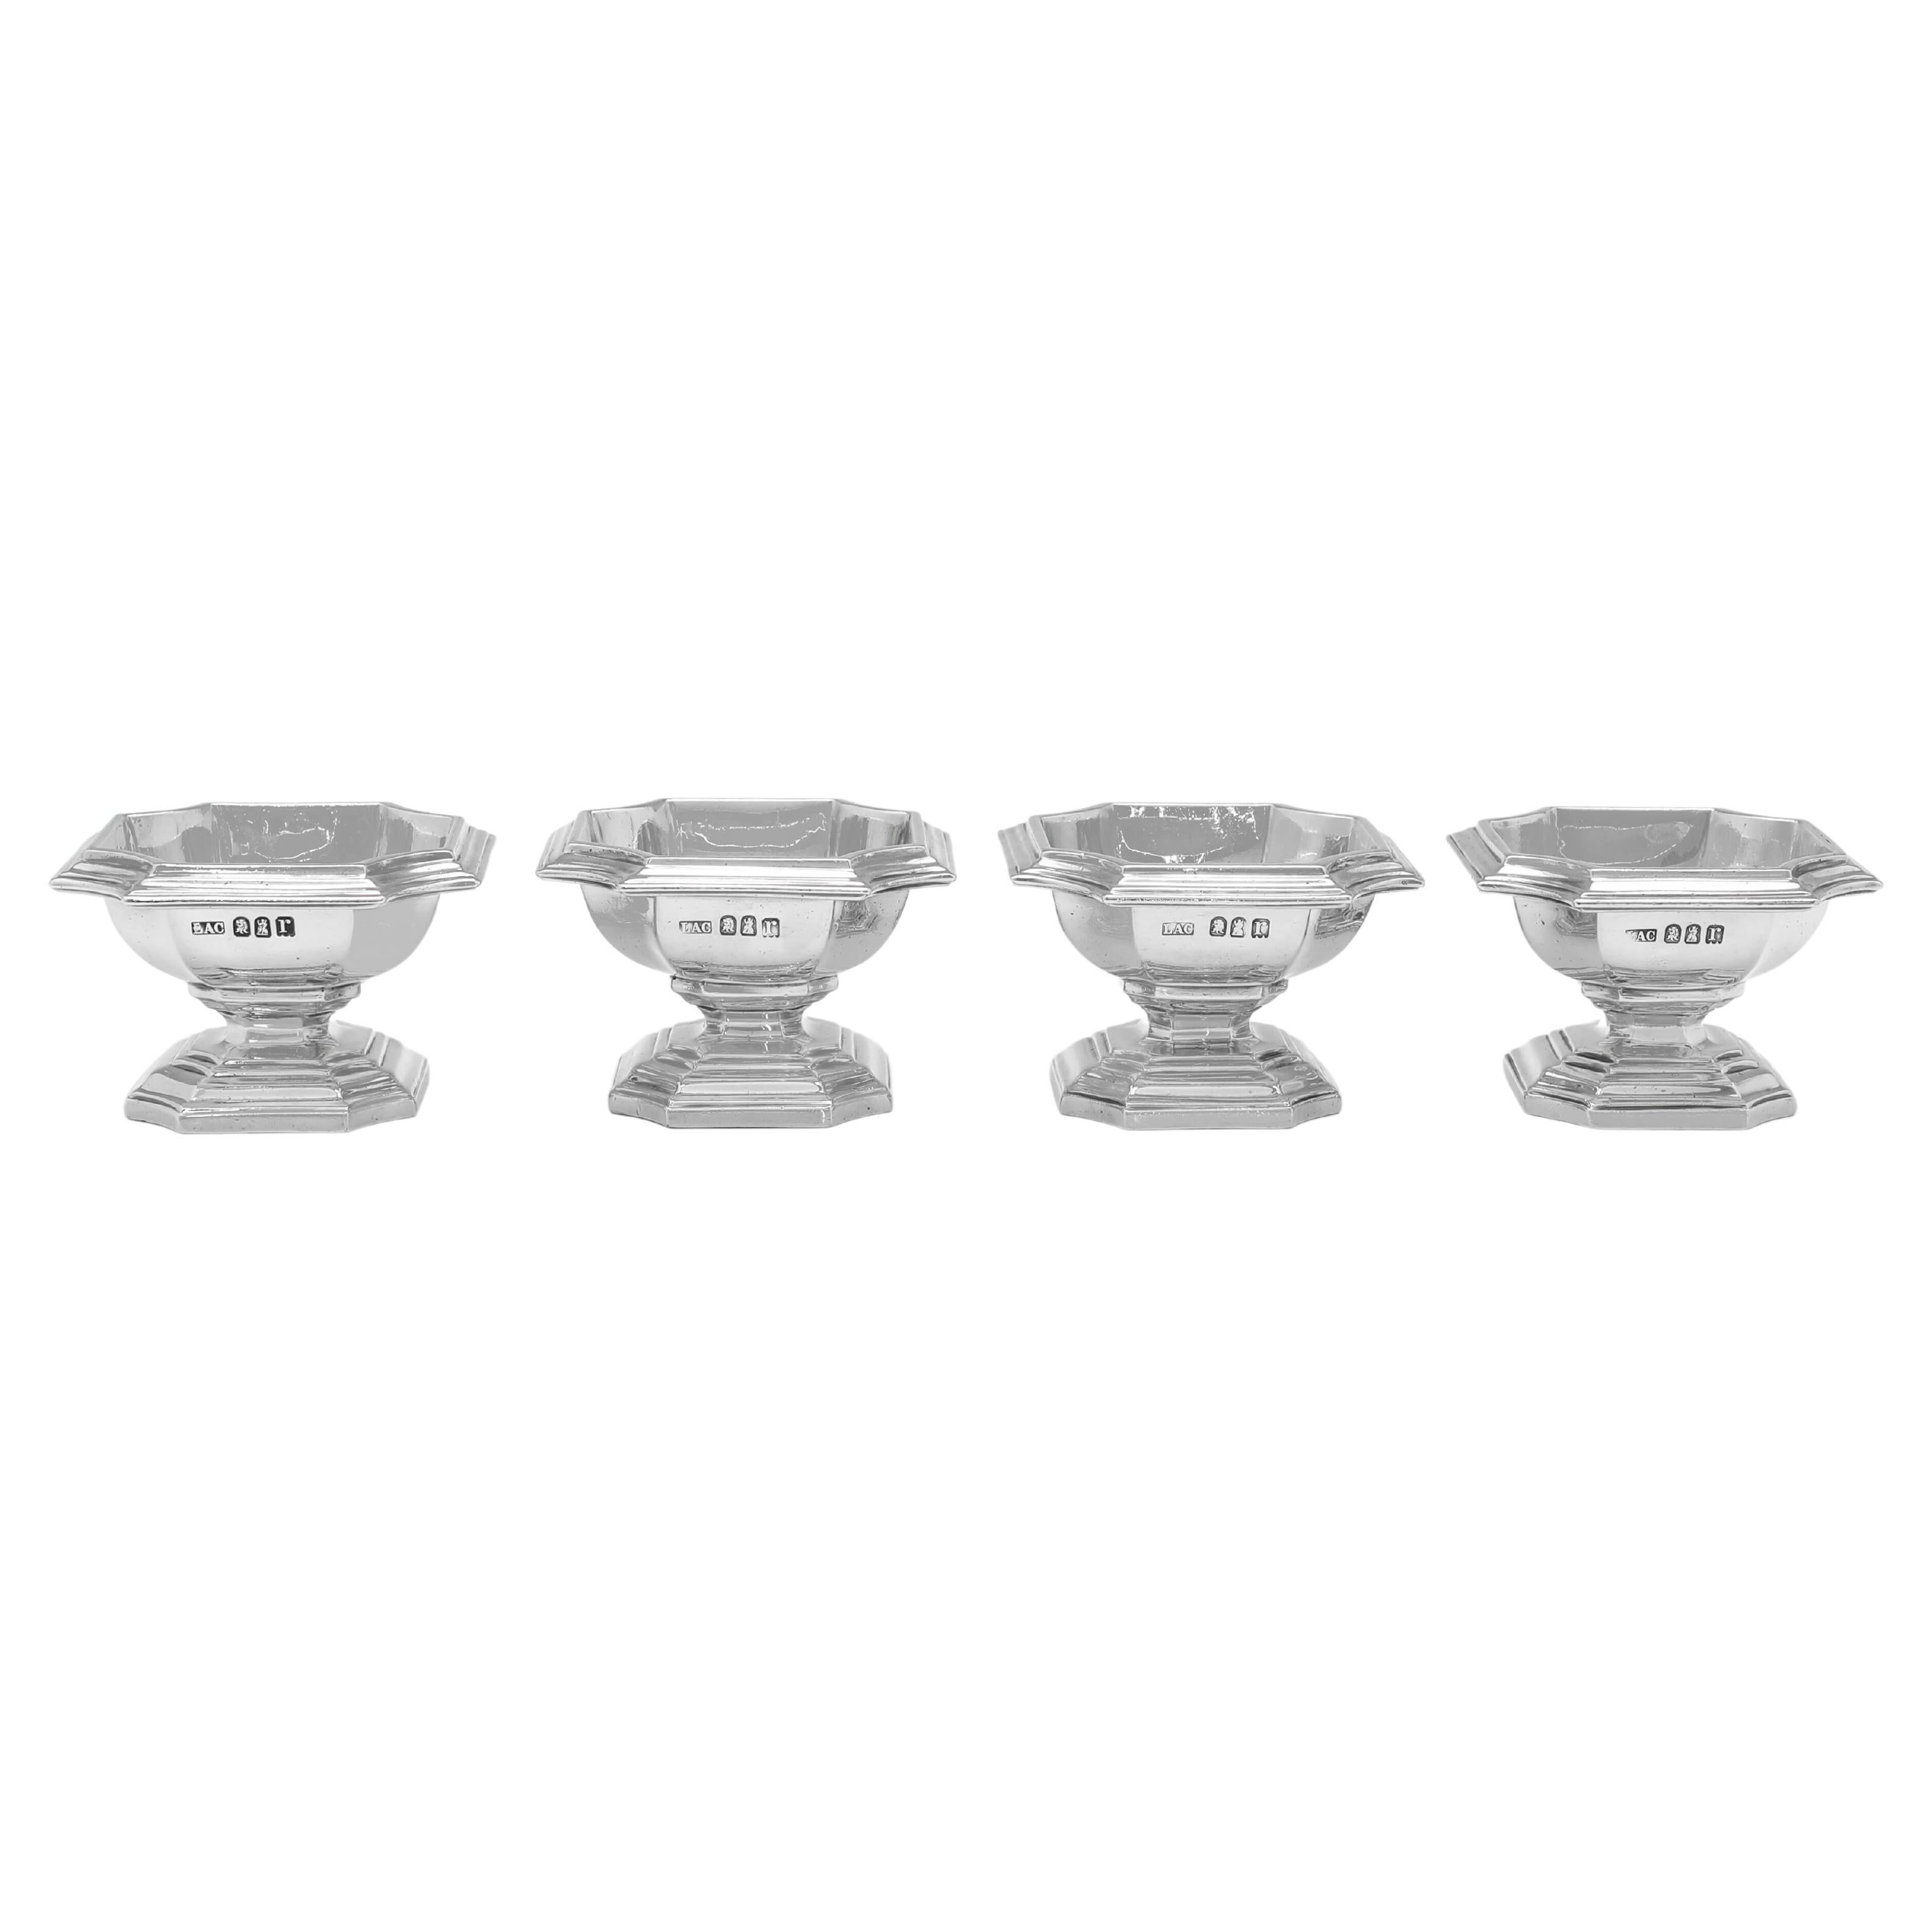 Antique Britannia Standard Silver Set Of 4 Salt Cellars - L. A. Crichton - 1912